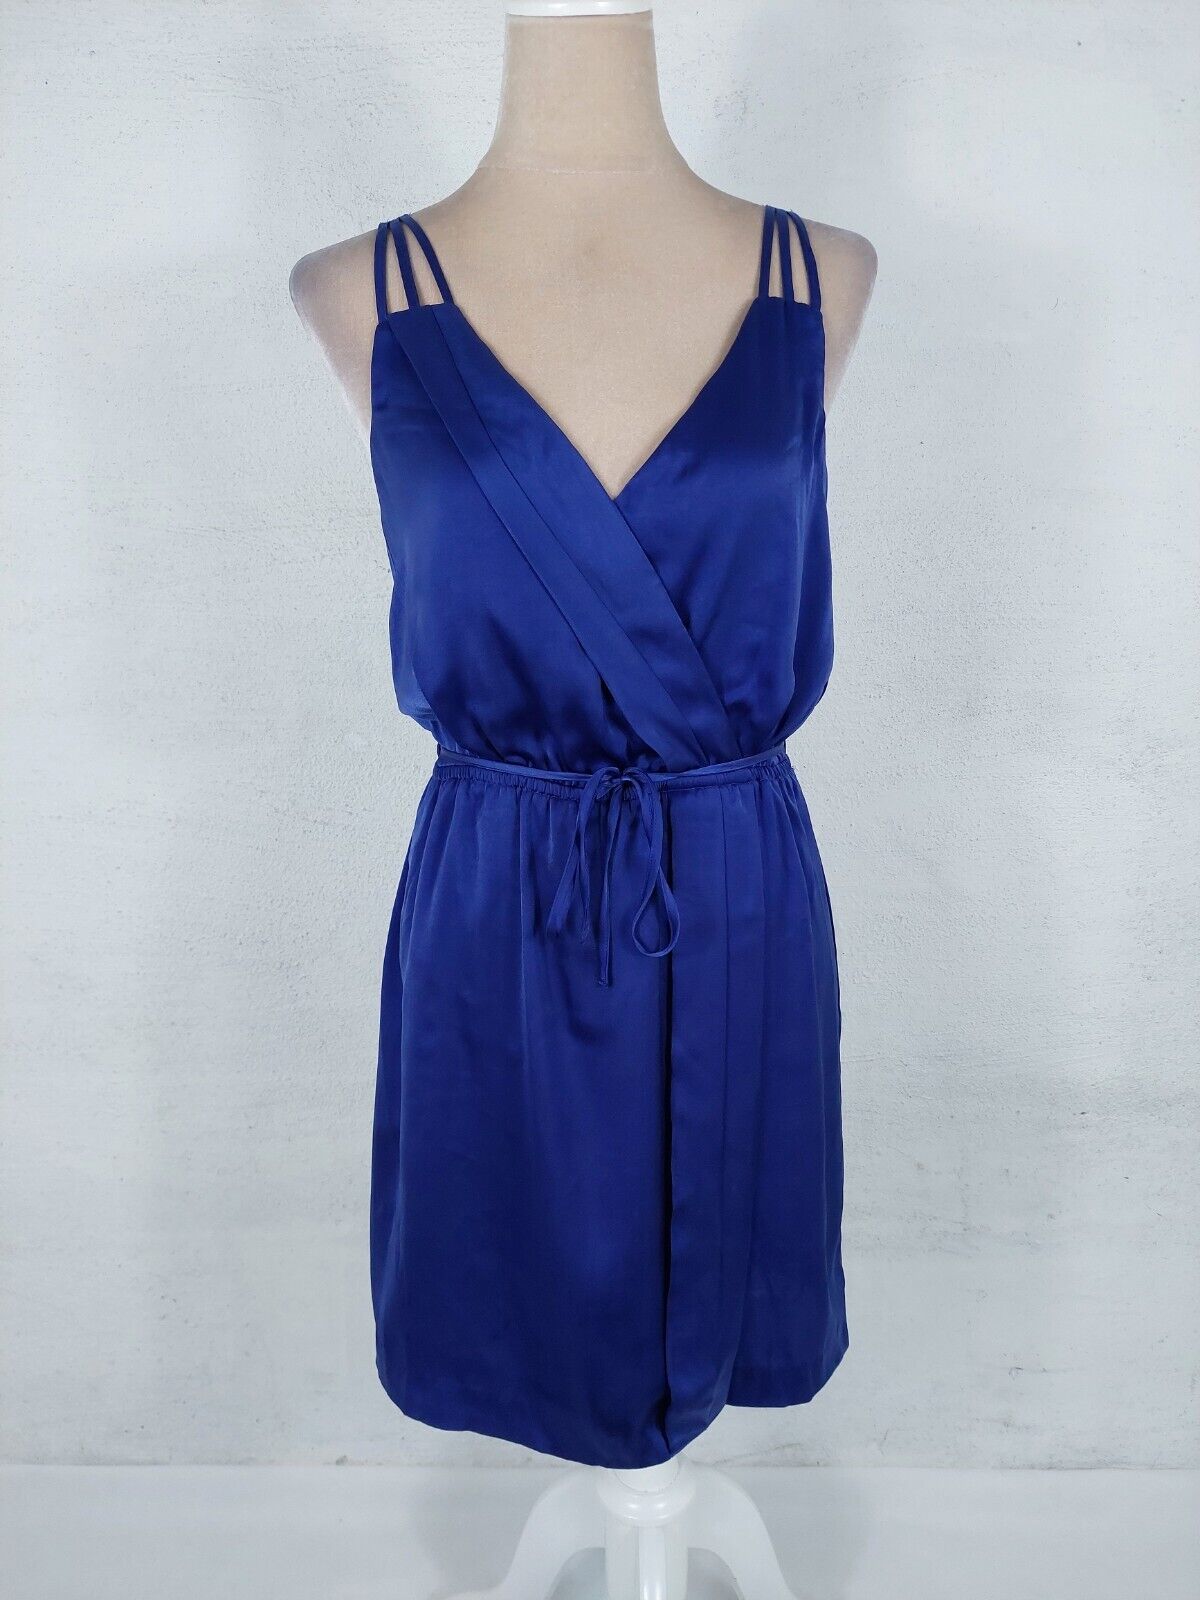 Vero Moda Kleid Gr. S 36 blau NEU (39,95) glänzend elegant Party dress